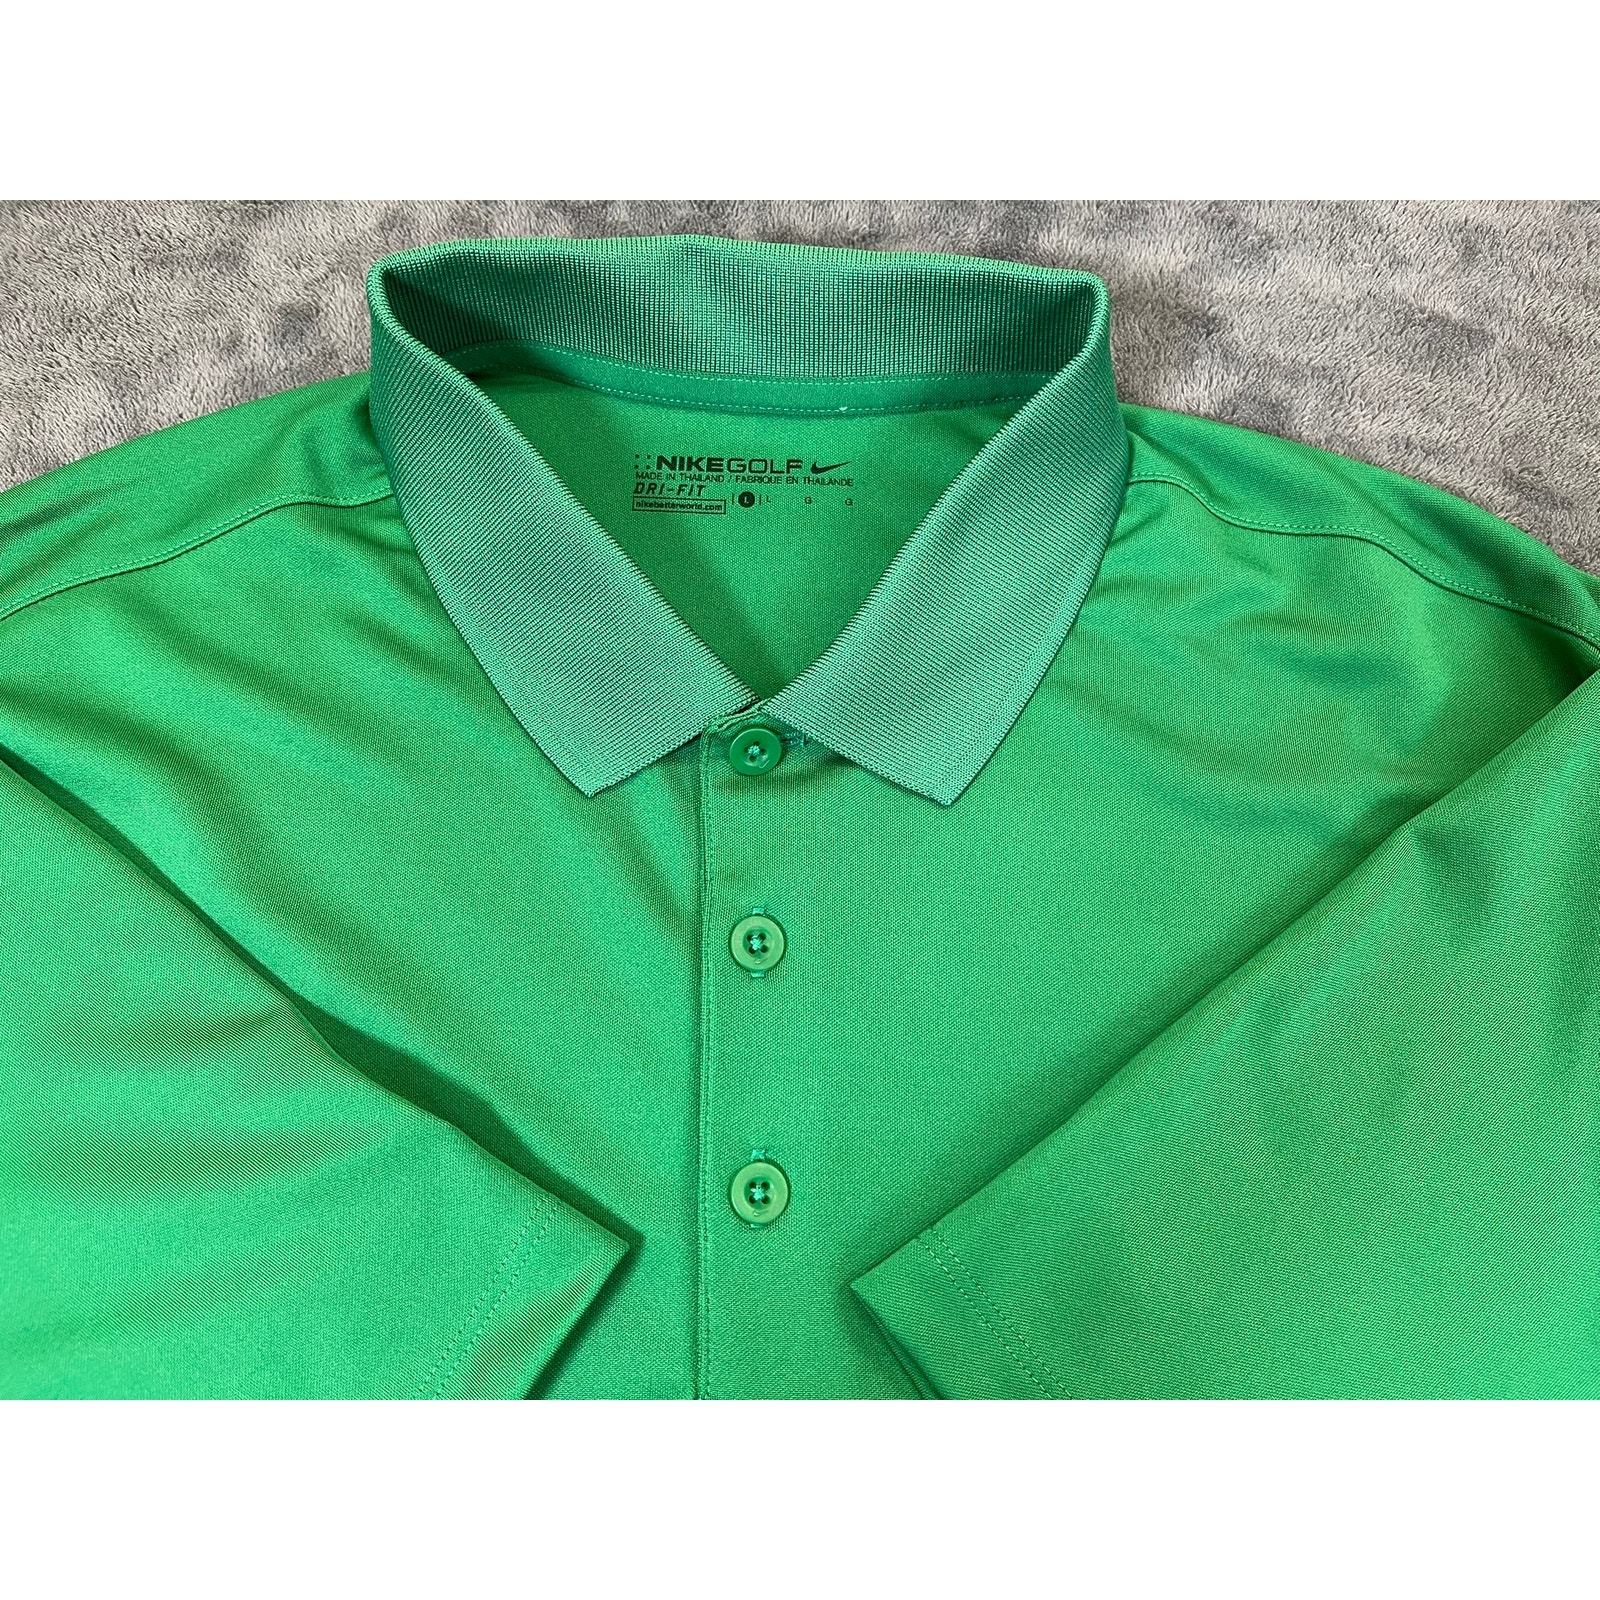 Nike Golf Dri Fit Men's Green Polo Size Large - $13.96